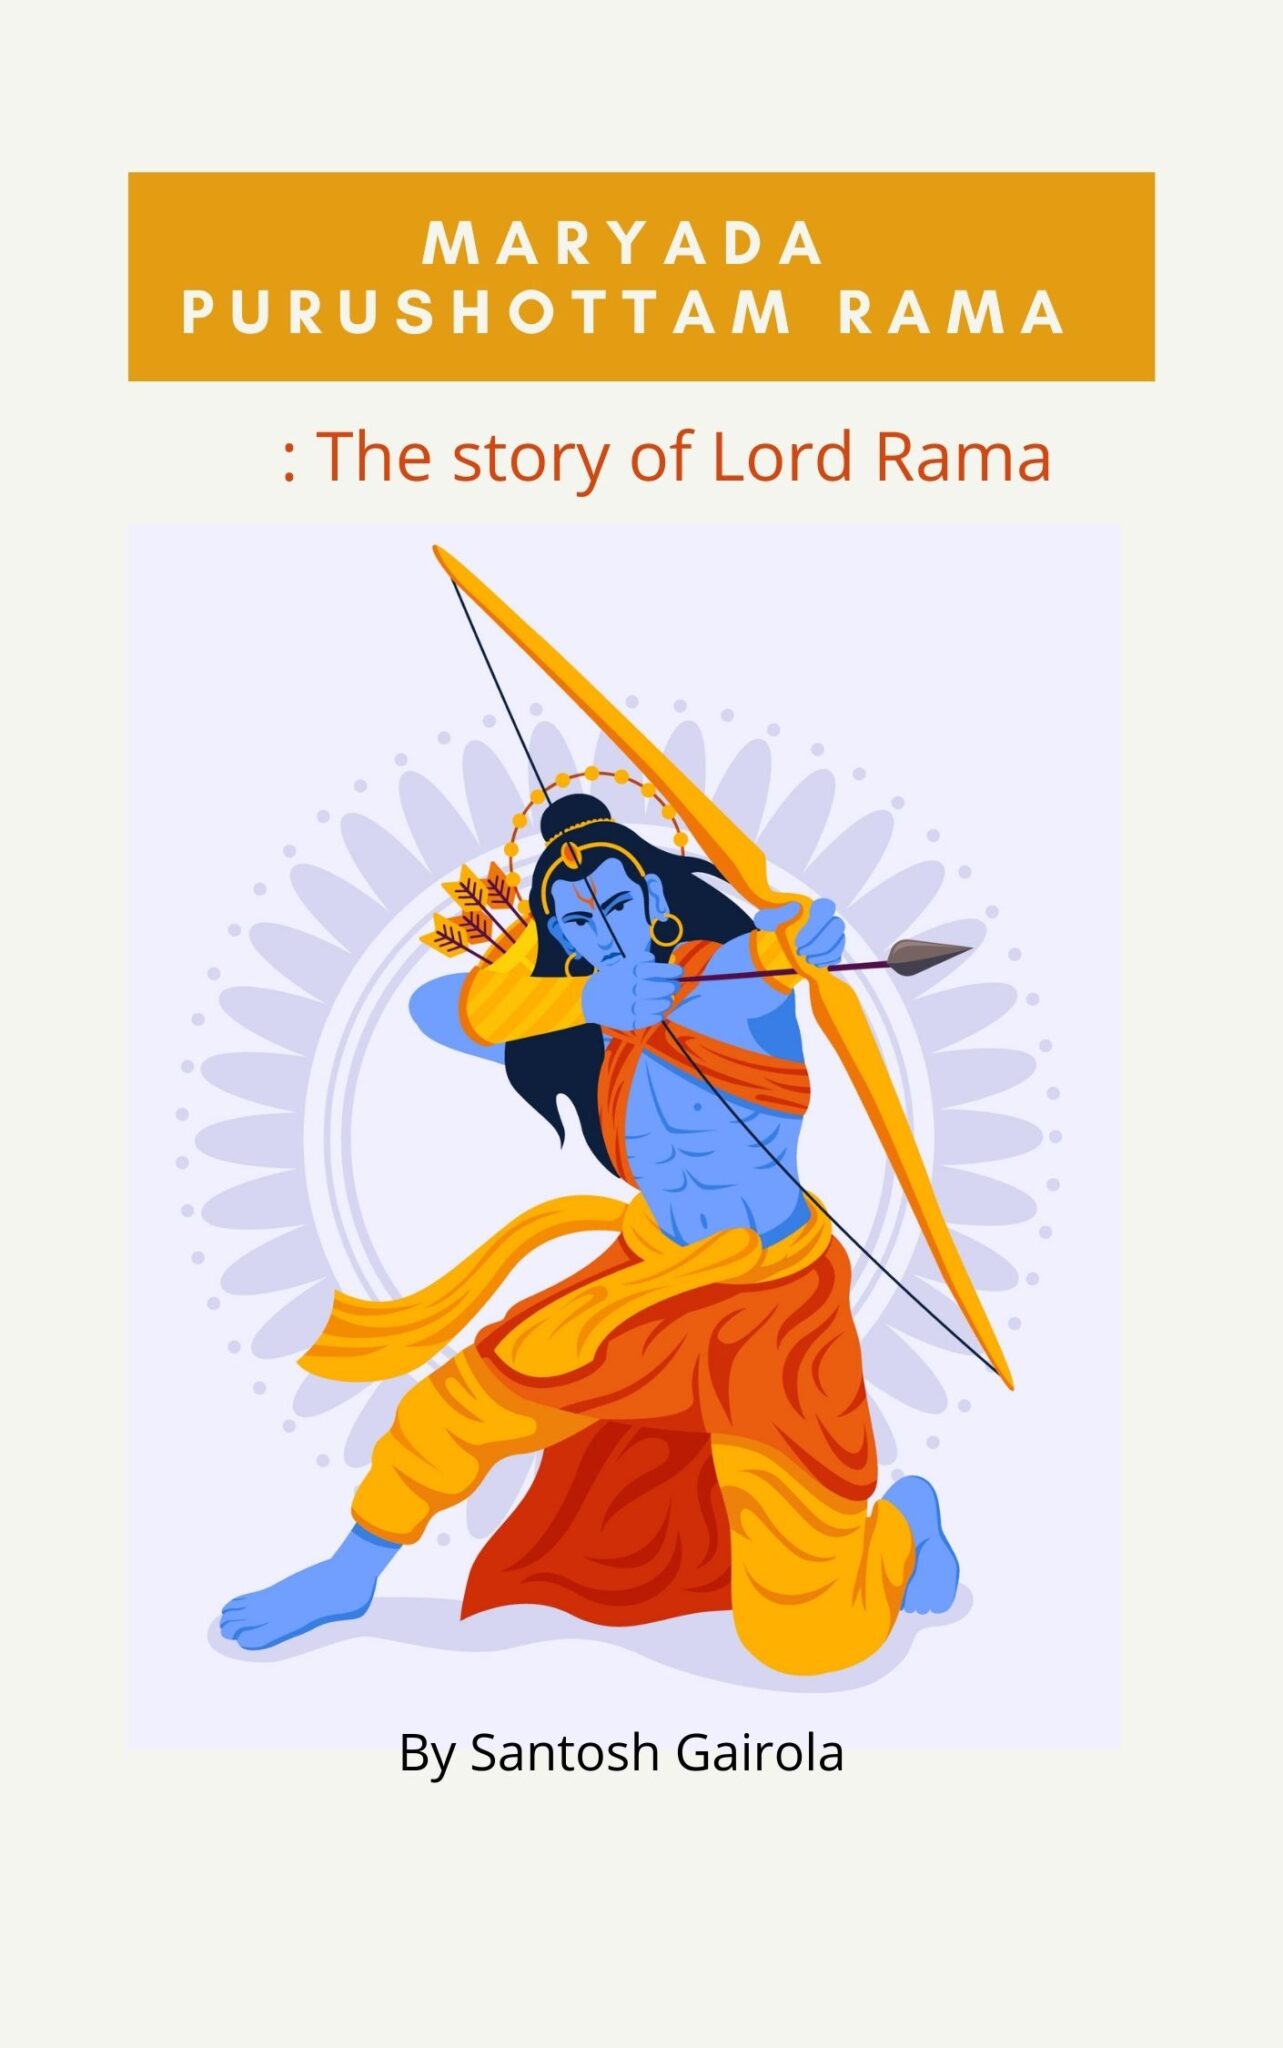 Maryada Purushottam Rama: The story of Lord Rama